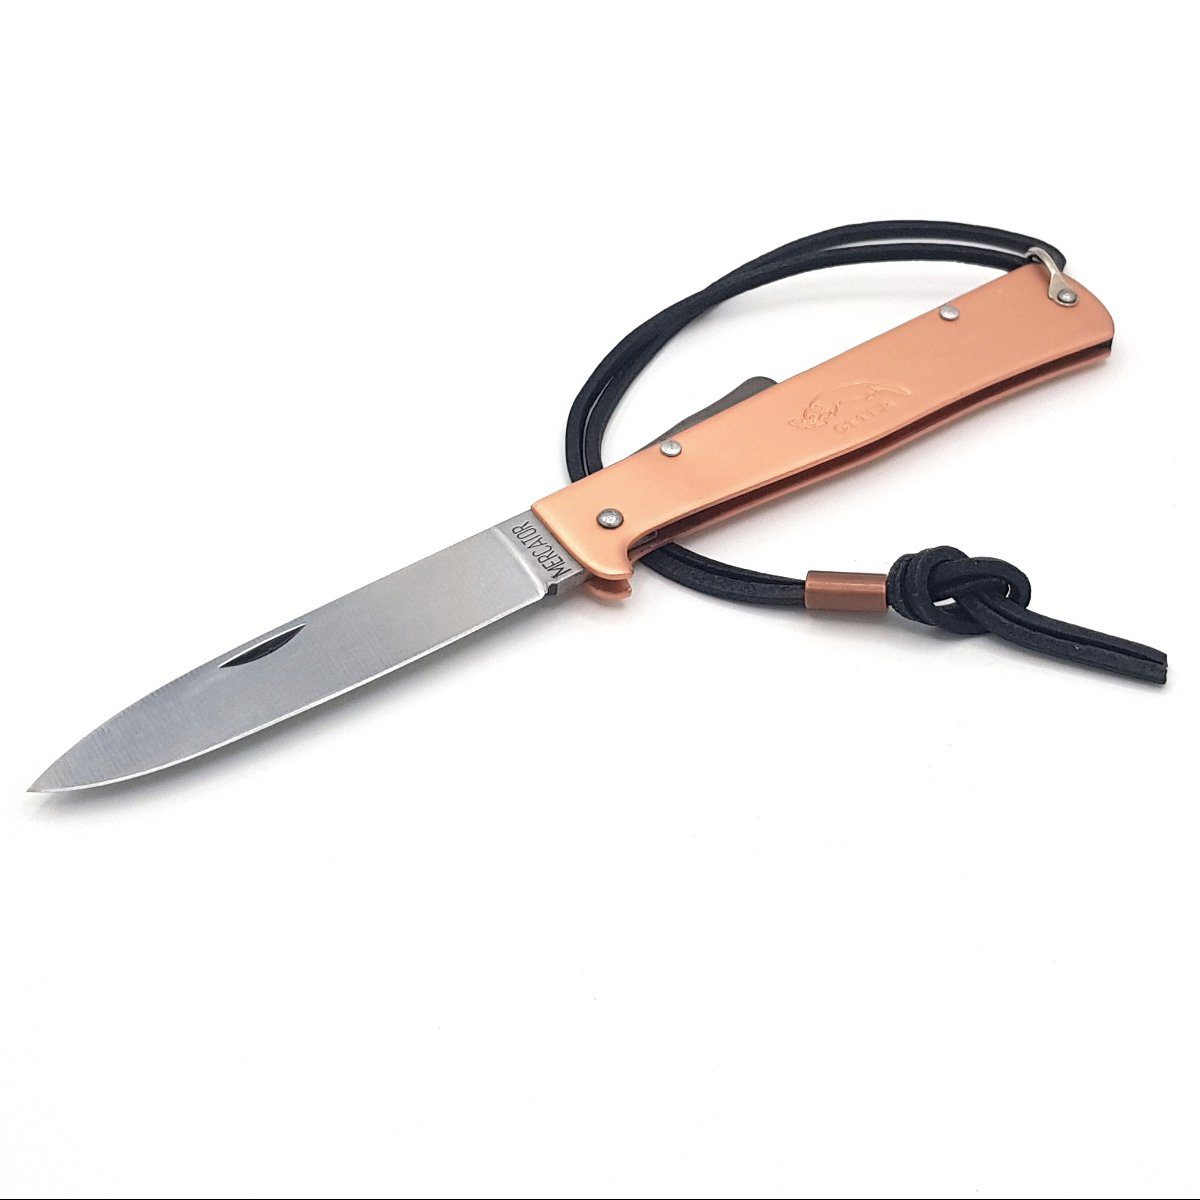 Otter Messer Mercator-Messer Backlock Lederband, Kupfer Klinge Taschenmesser groß Carbonstahl, mit